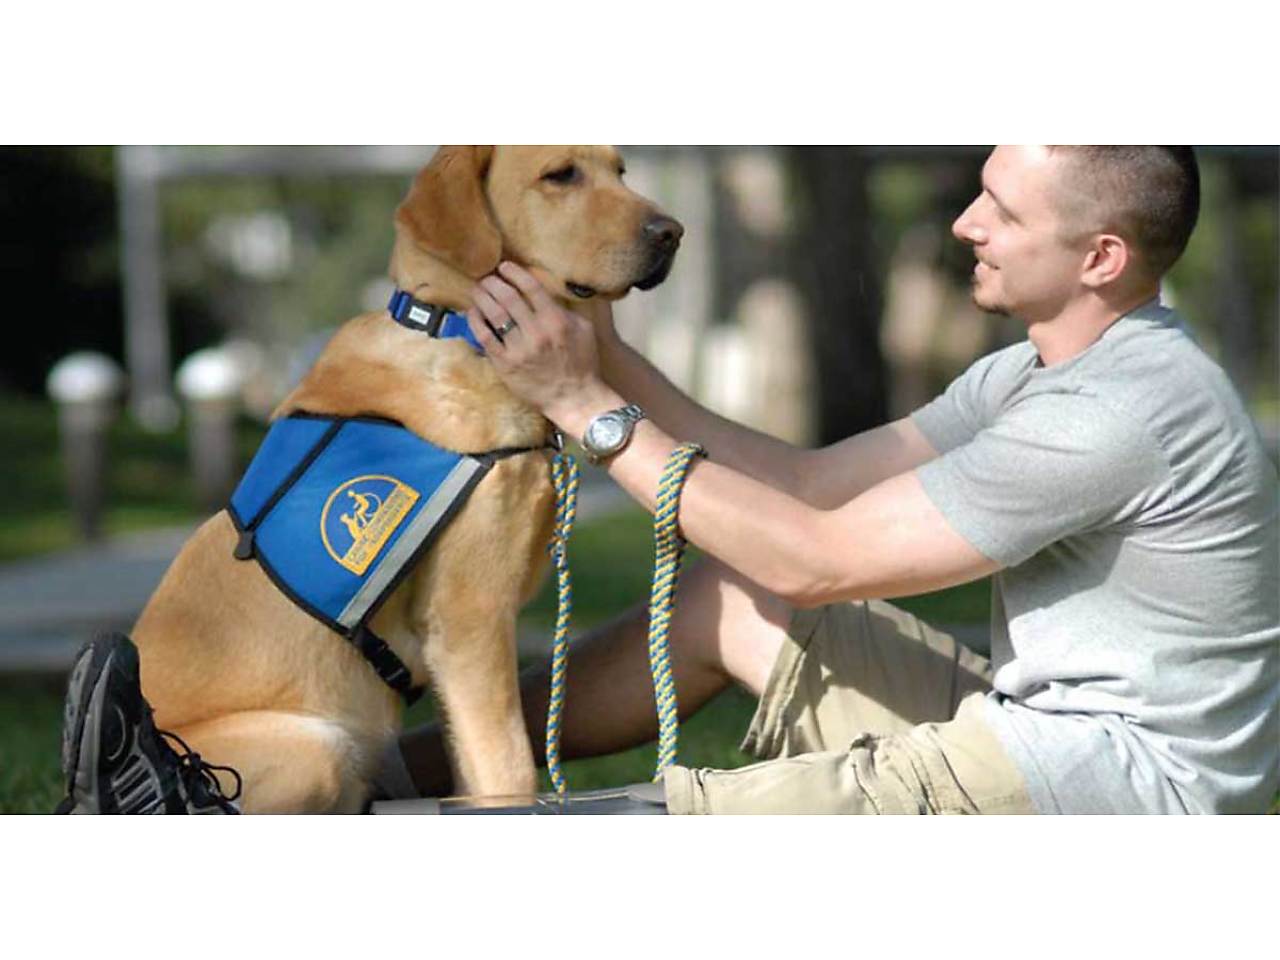 ptsd dpg.jpg - Service dog for Veteran with PTSD image